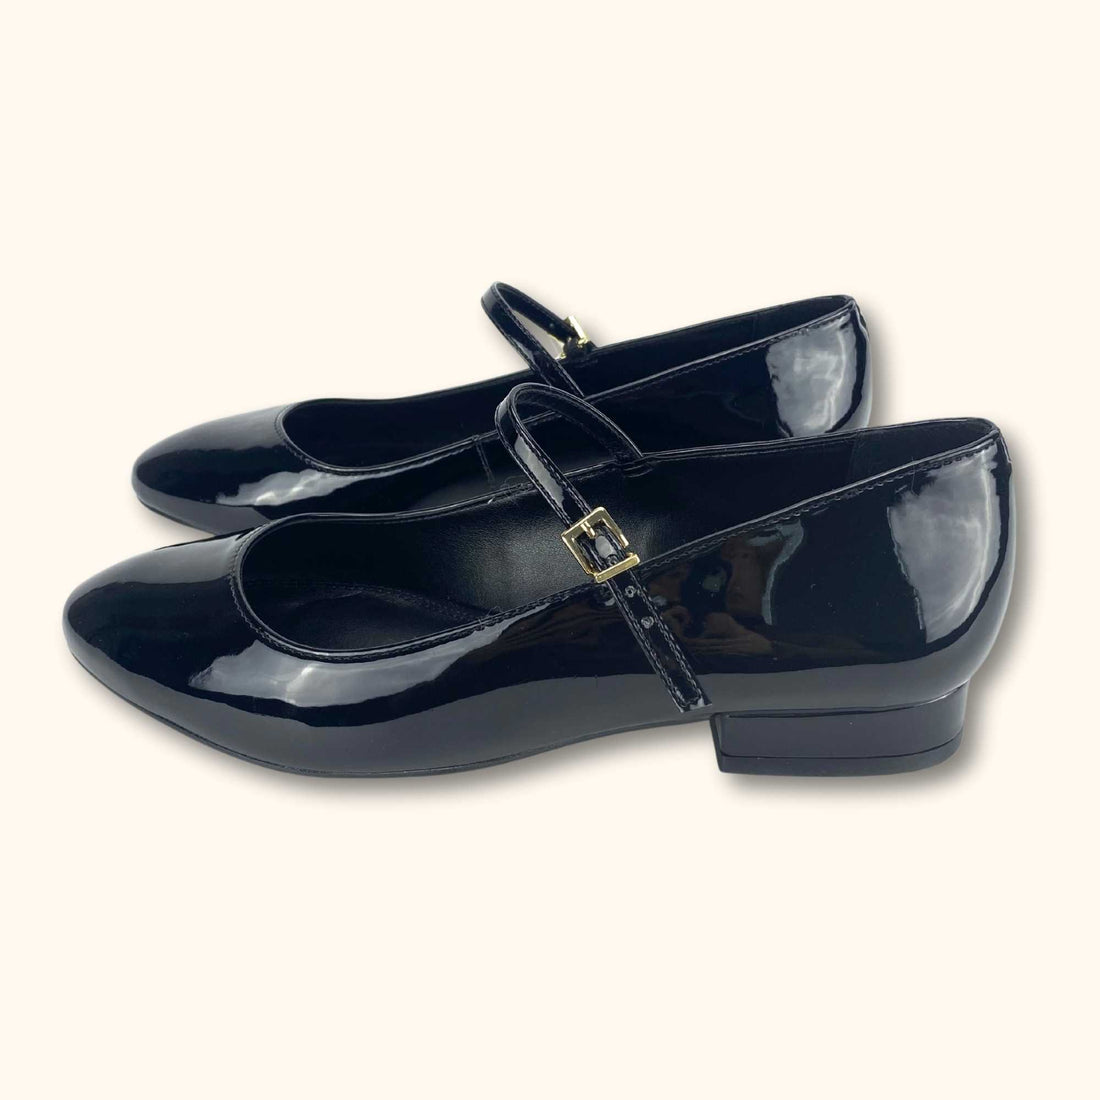 Dune London Black Patent Ballet Shoes - Size 3 - Sunshine Thrift